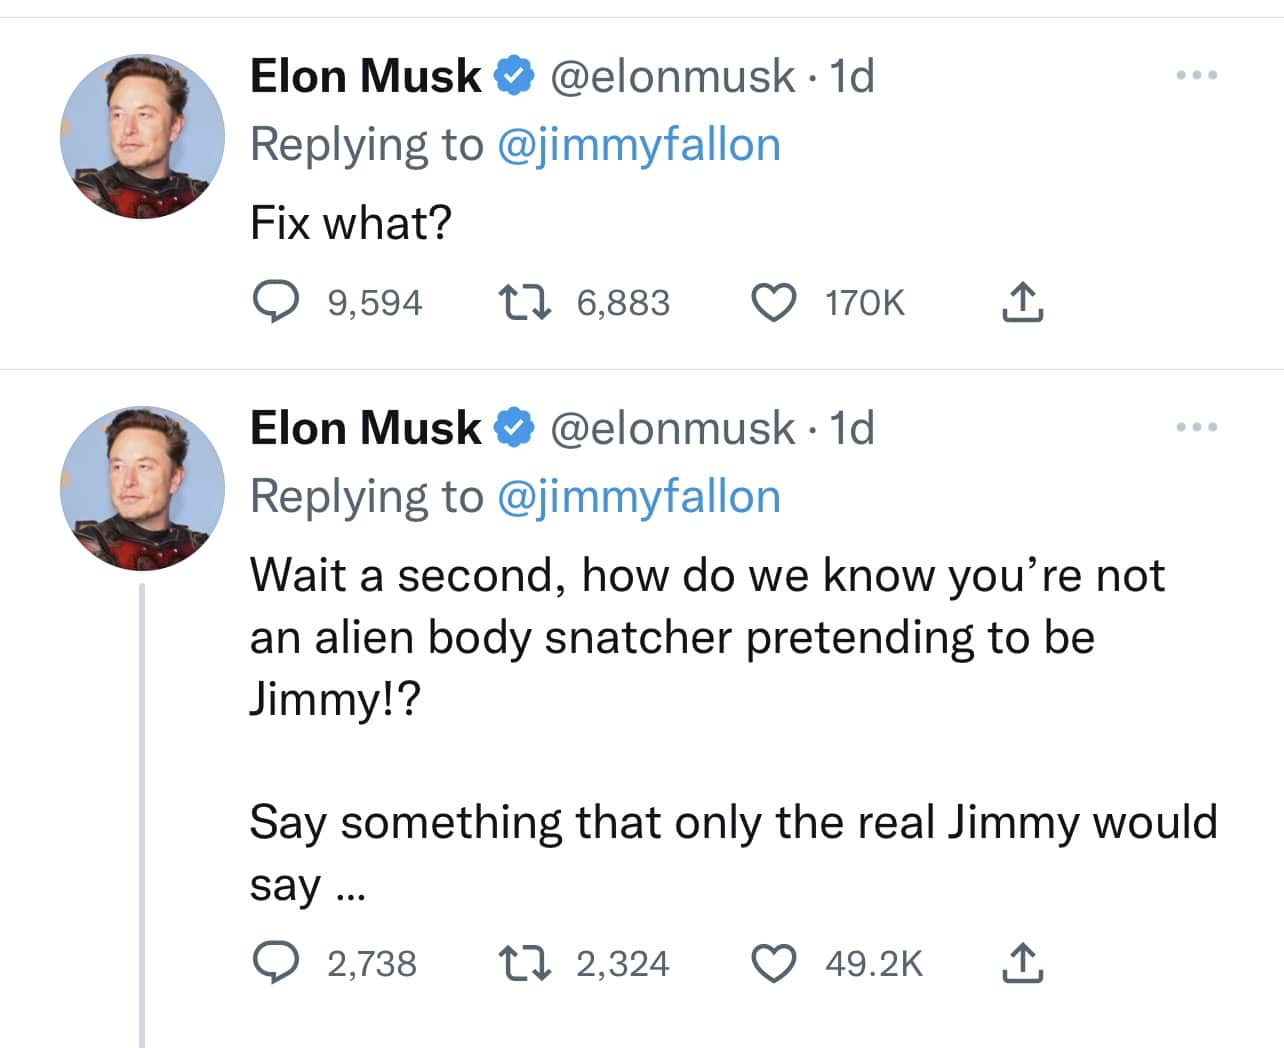 Tweet about Jimmy Fallon from Elon Musk